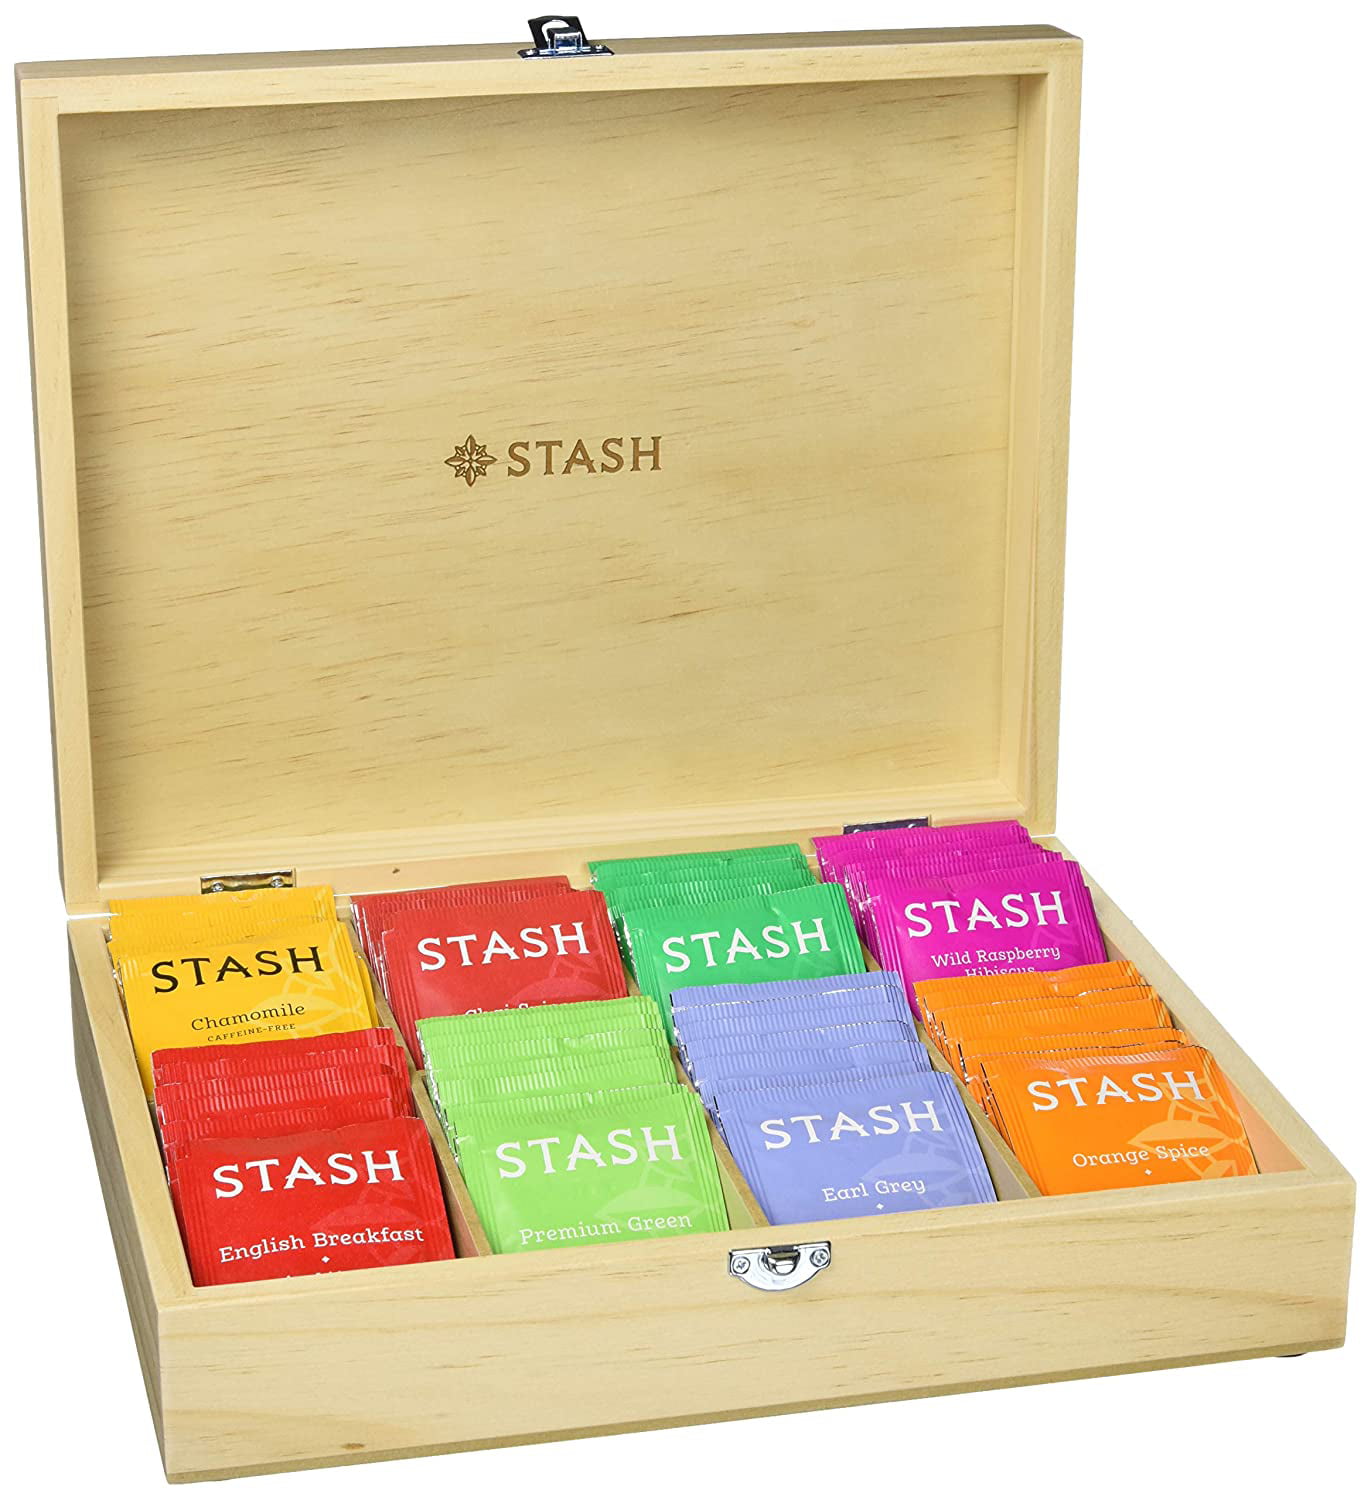 Stash Tea 8 Flavor Variety Pack Gift Set 80 Count Tea Bags